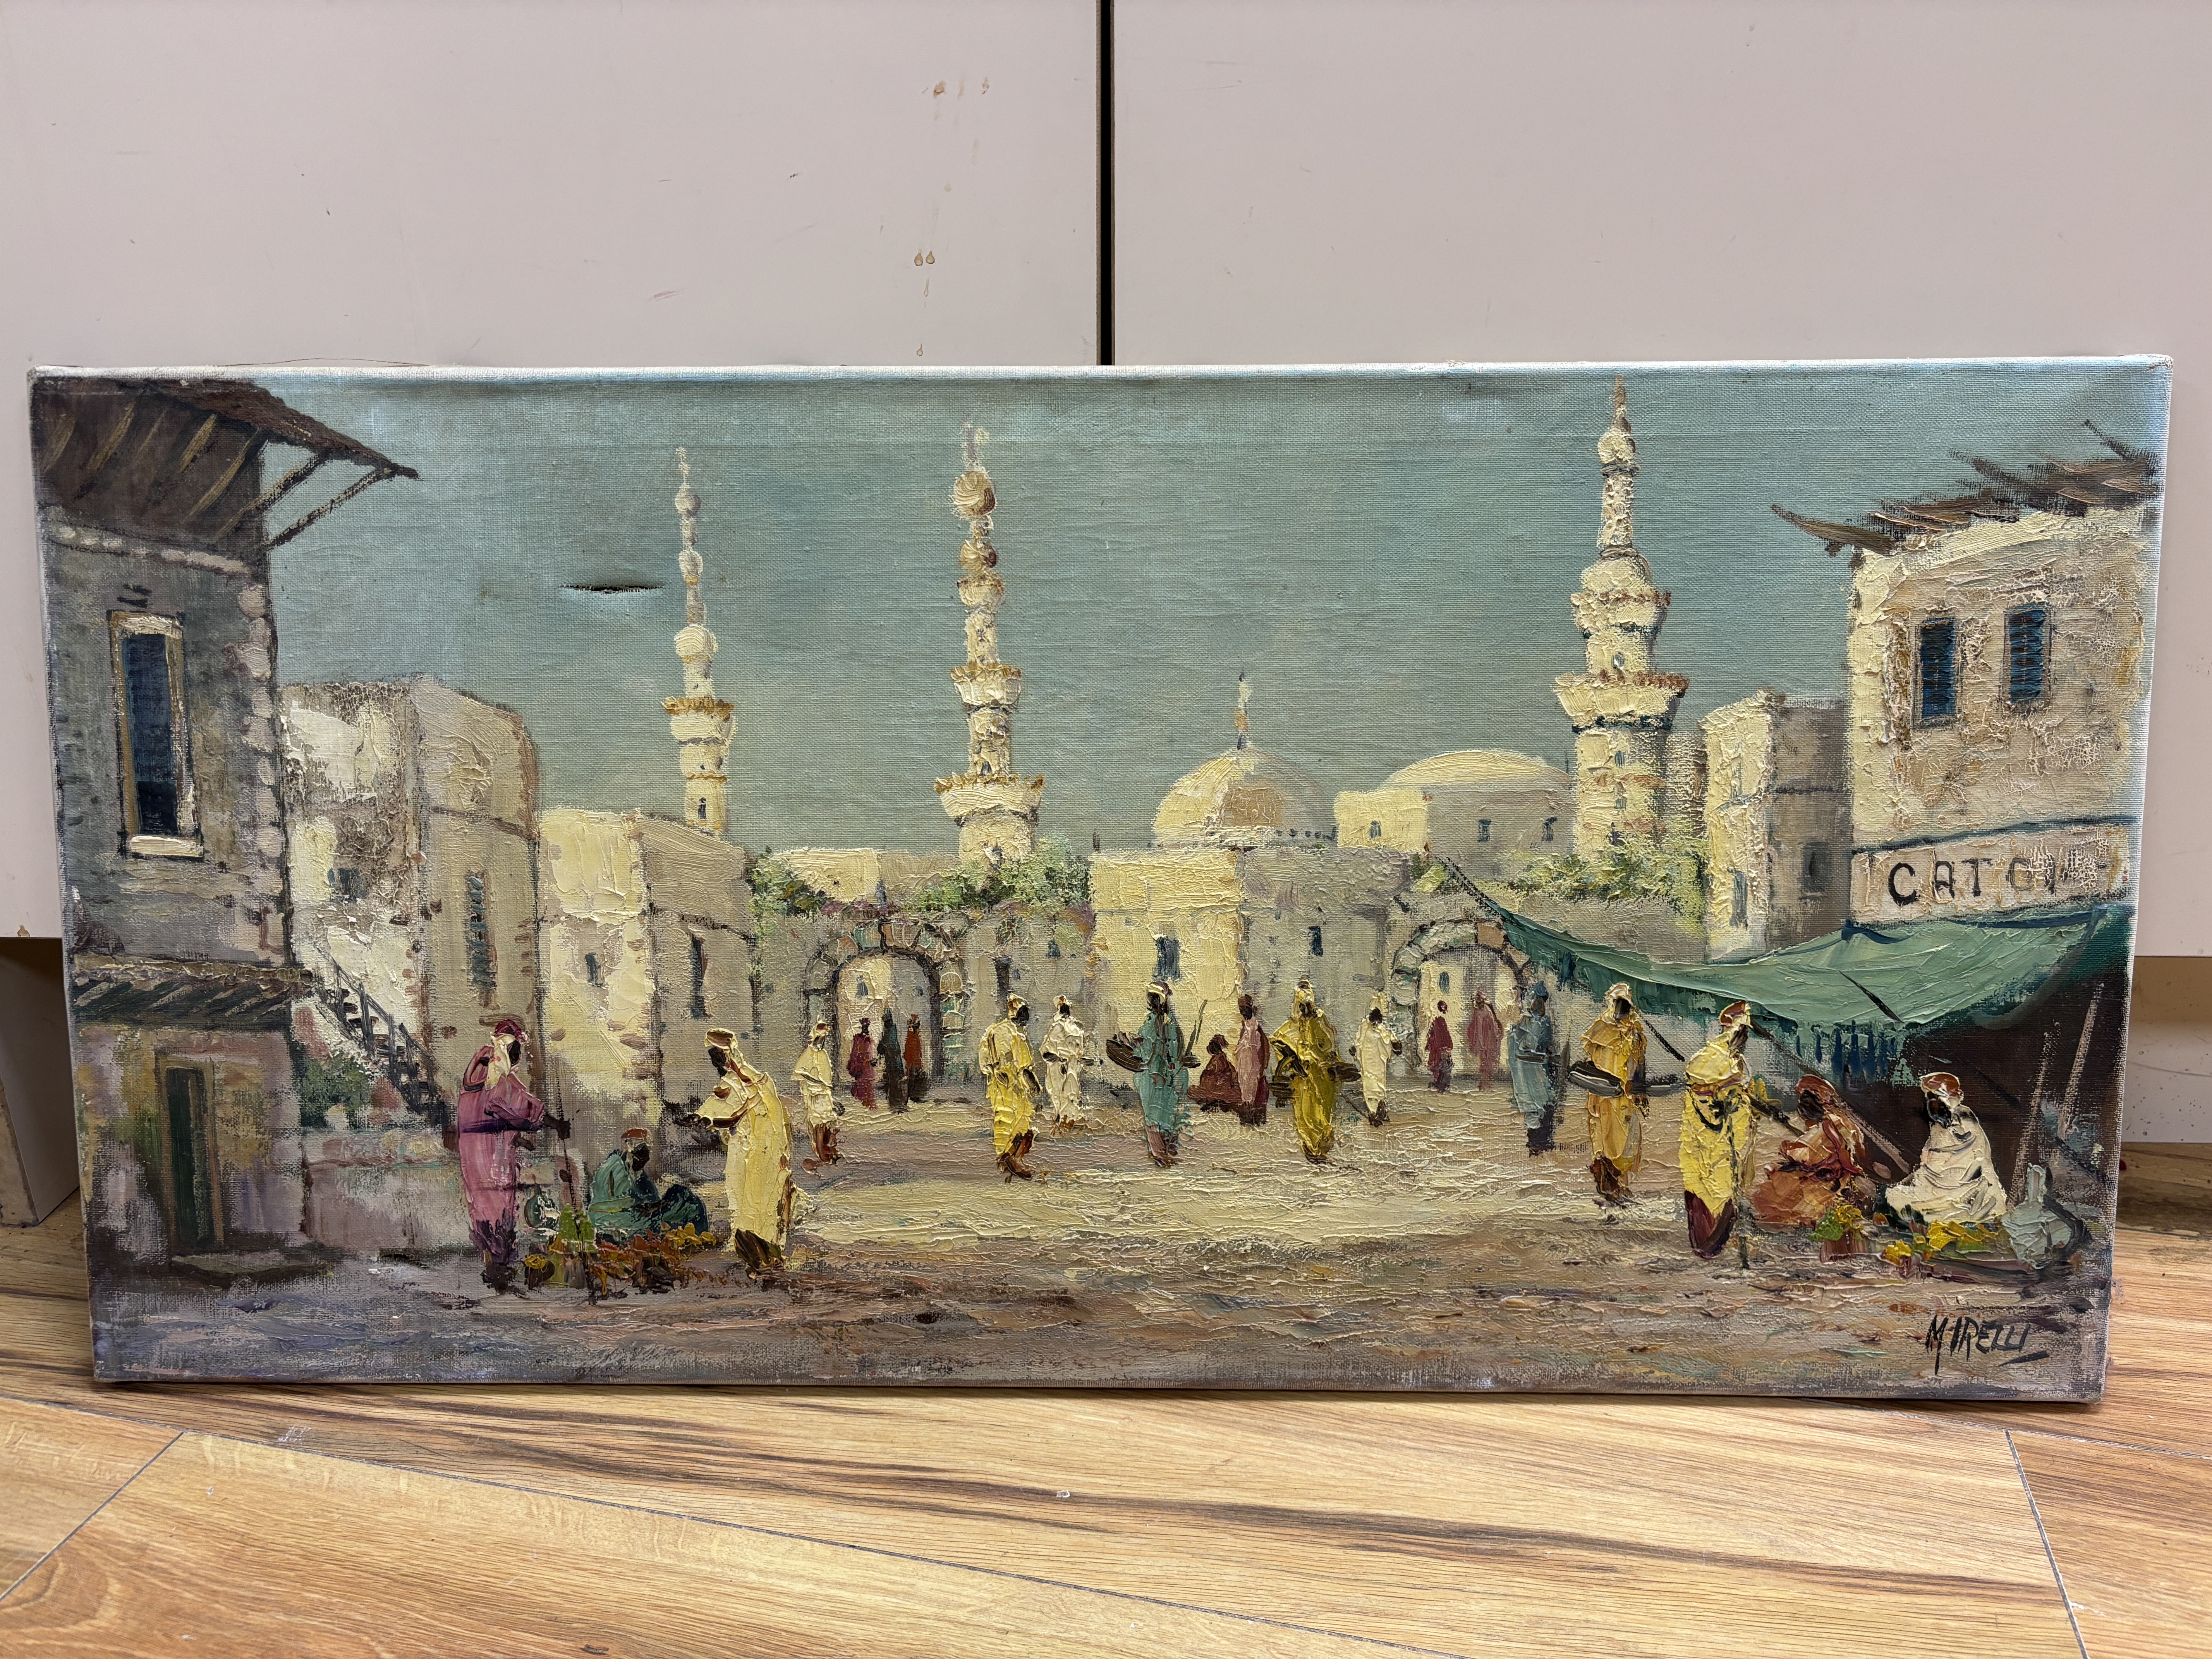 Mirelli, Orientalist style impasto oil on canvas, Market scene with figures, signed, 40 x 80cm, unframed